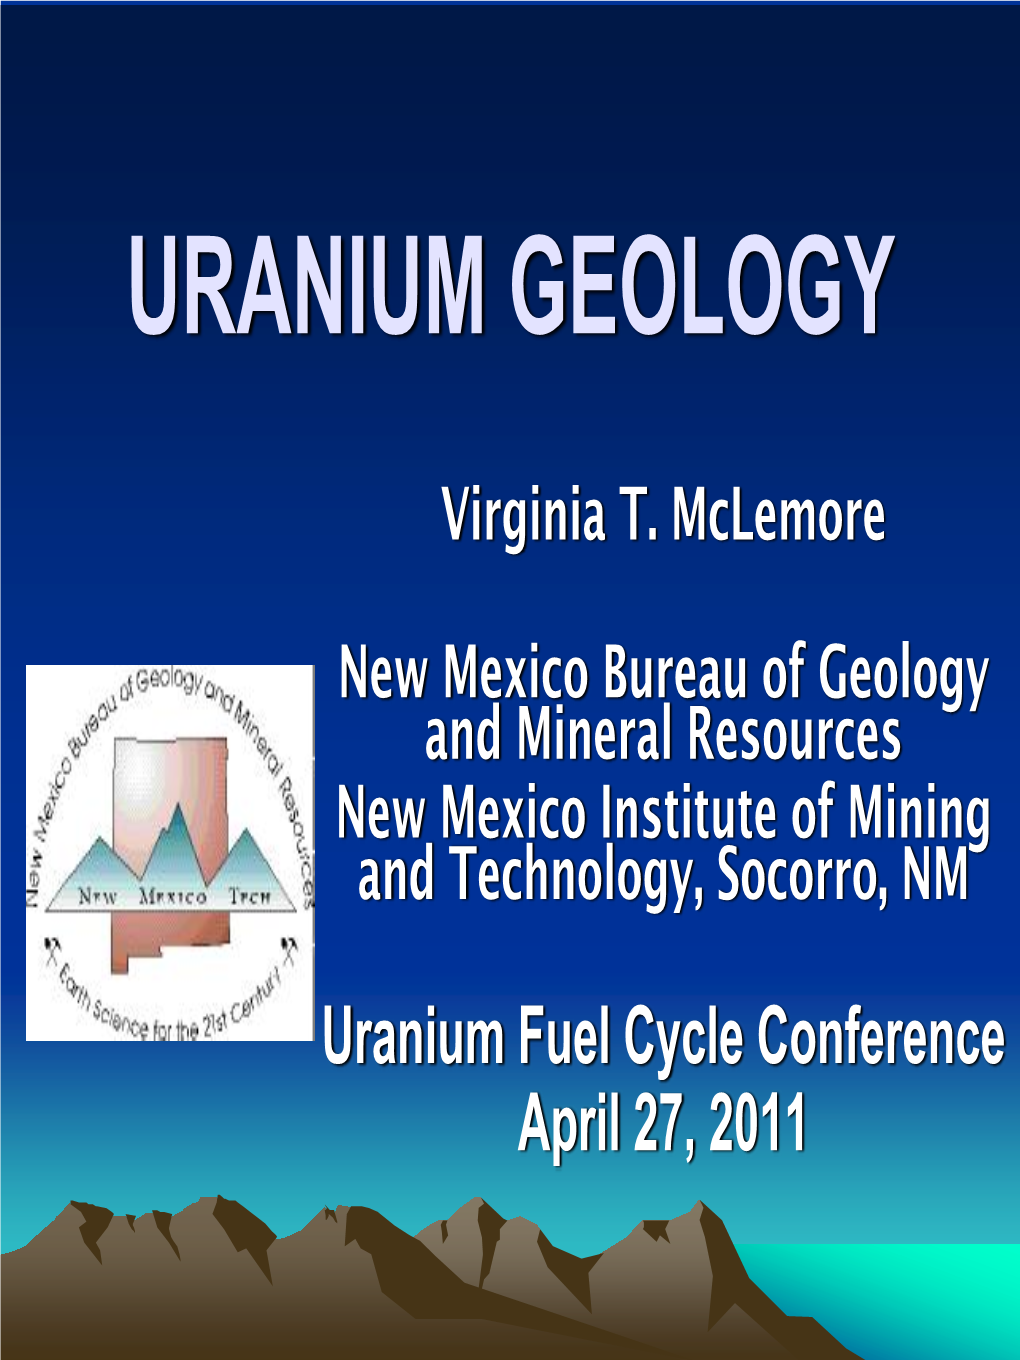 Uranium Geology